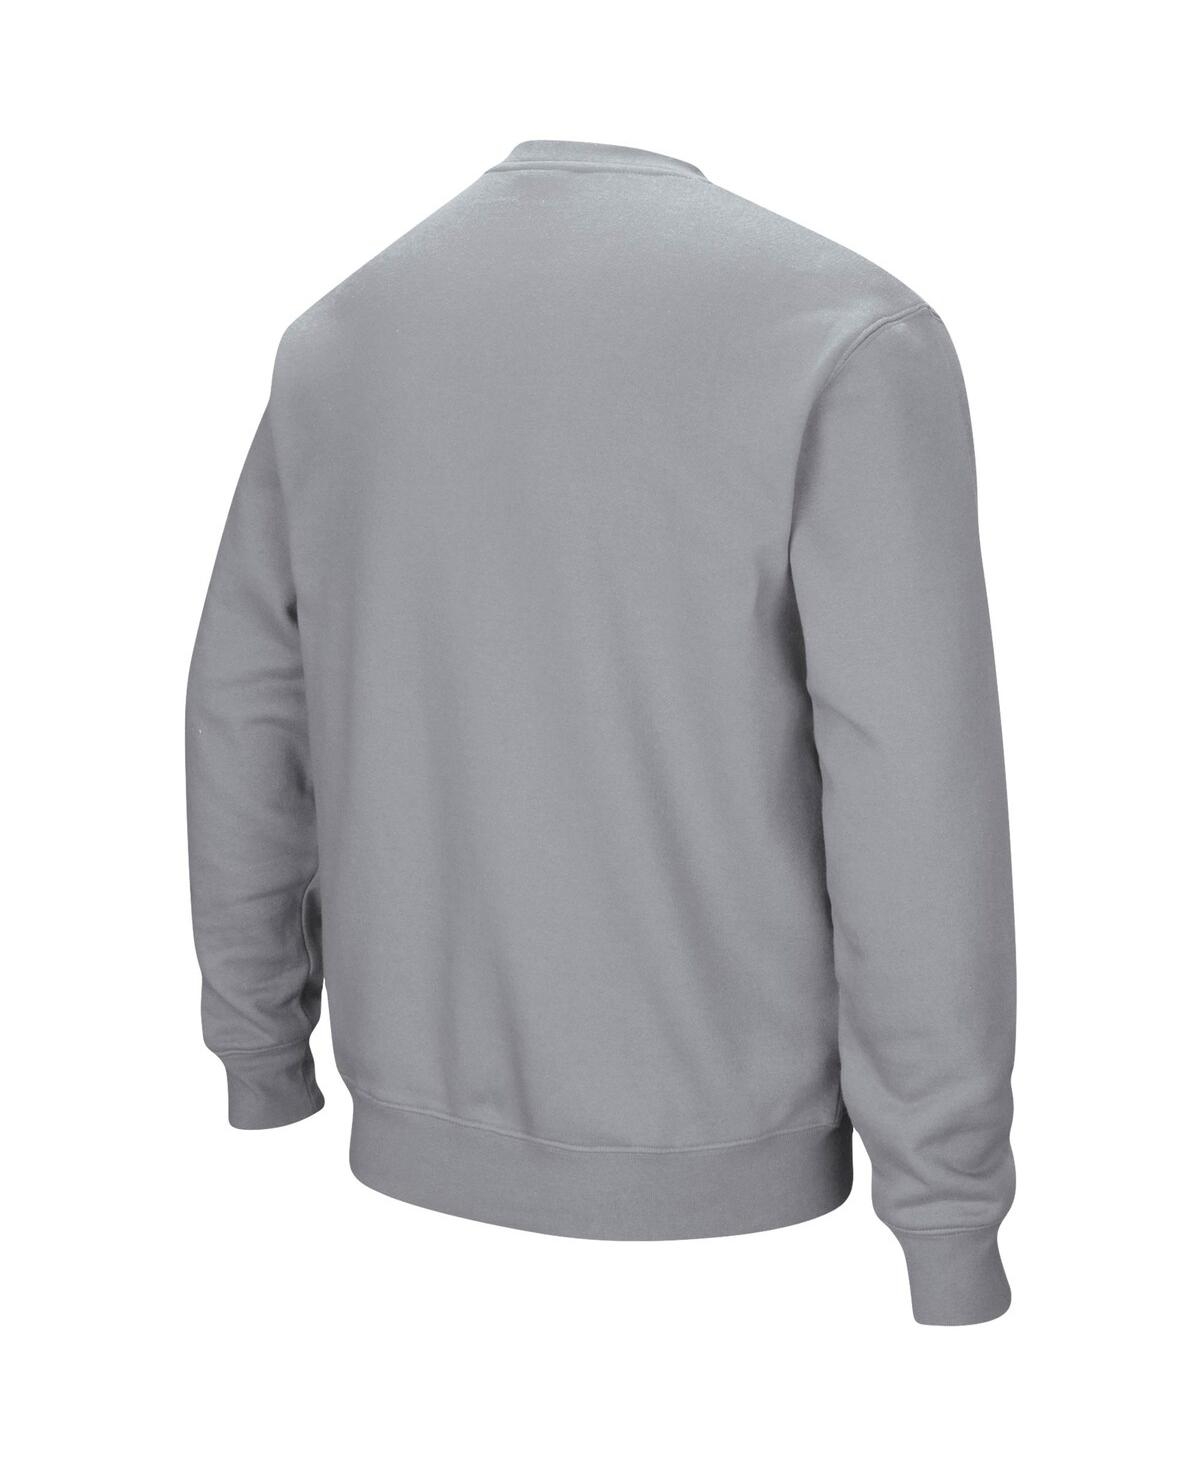 Shop Colosseum Men's  Heathered Gray Boston College Eagles Arch & Logo Tackle Twill Pullover Sweatshirt